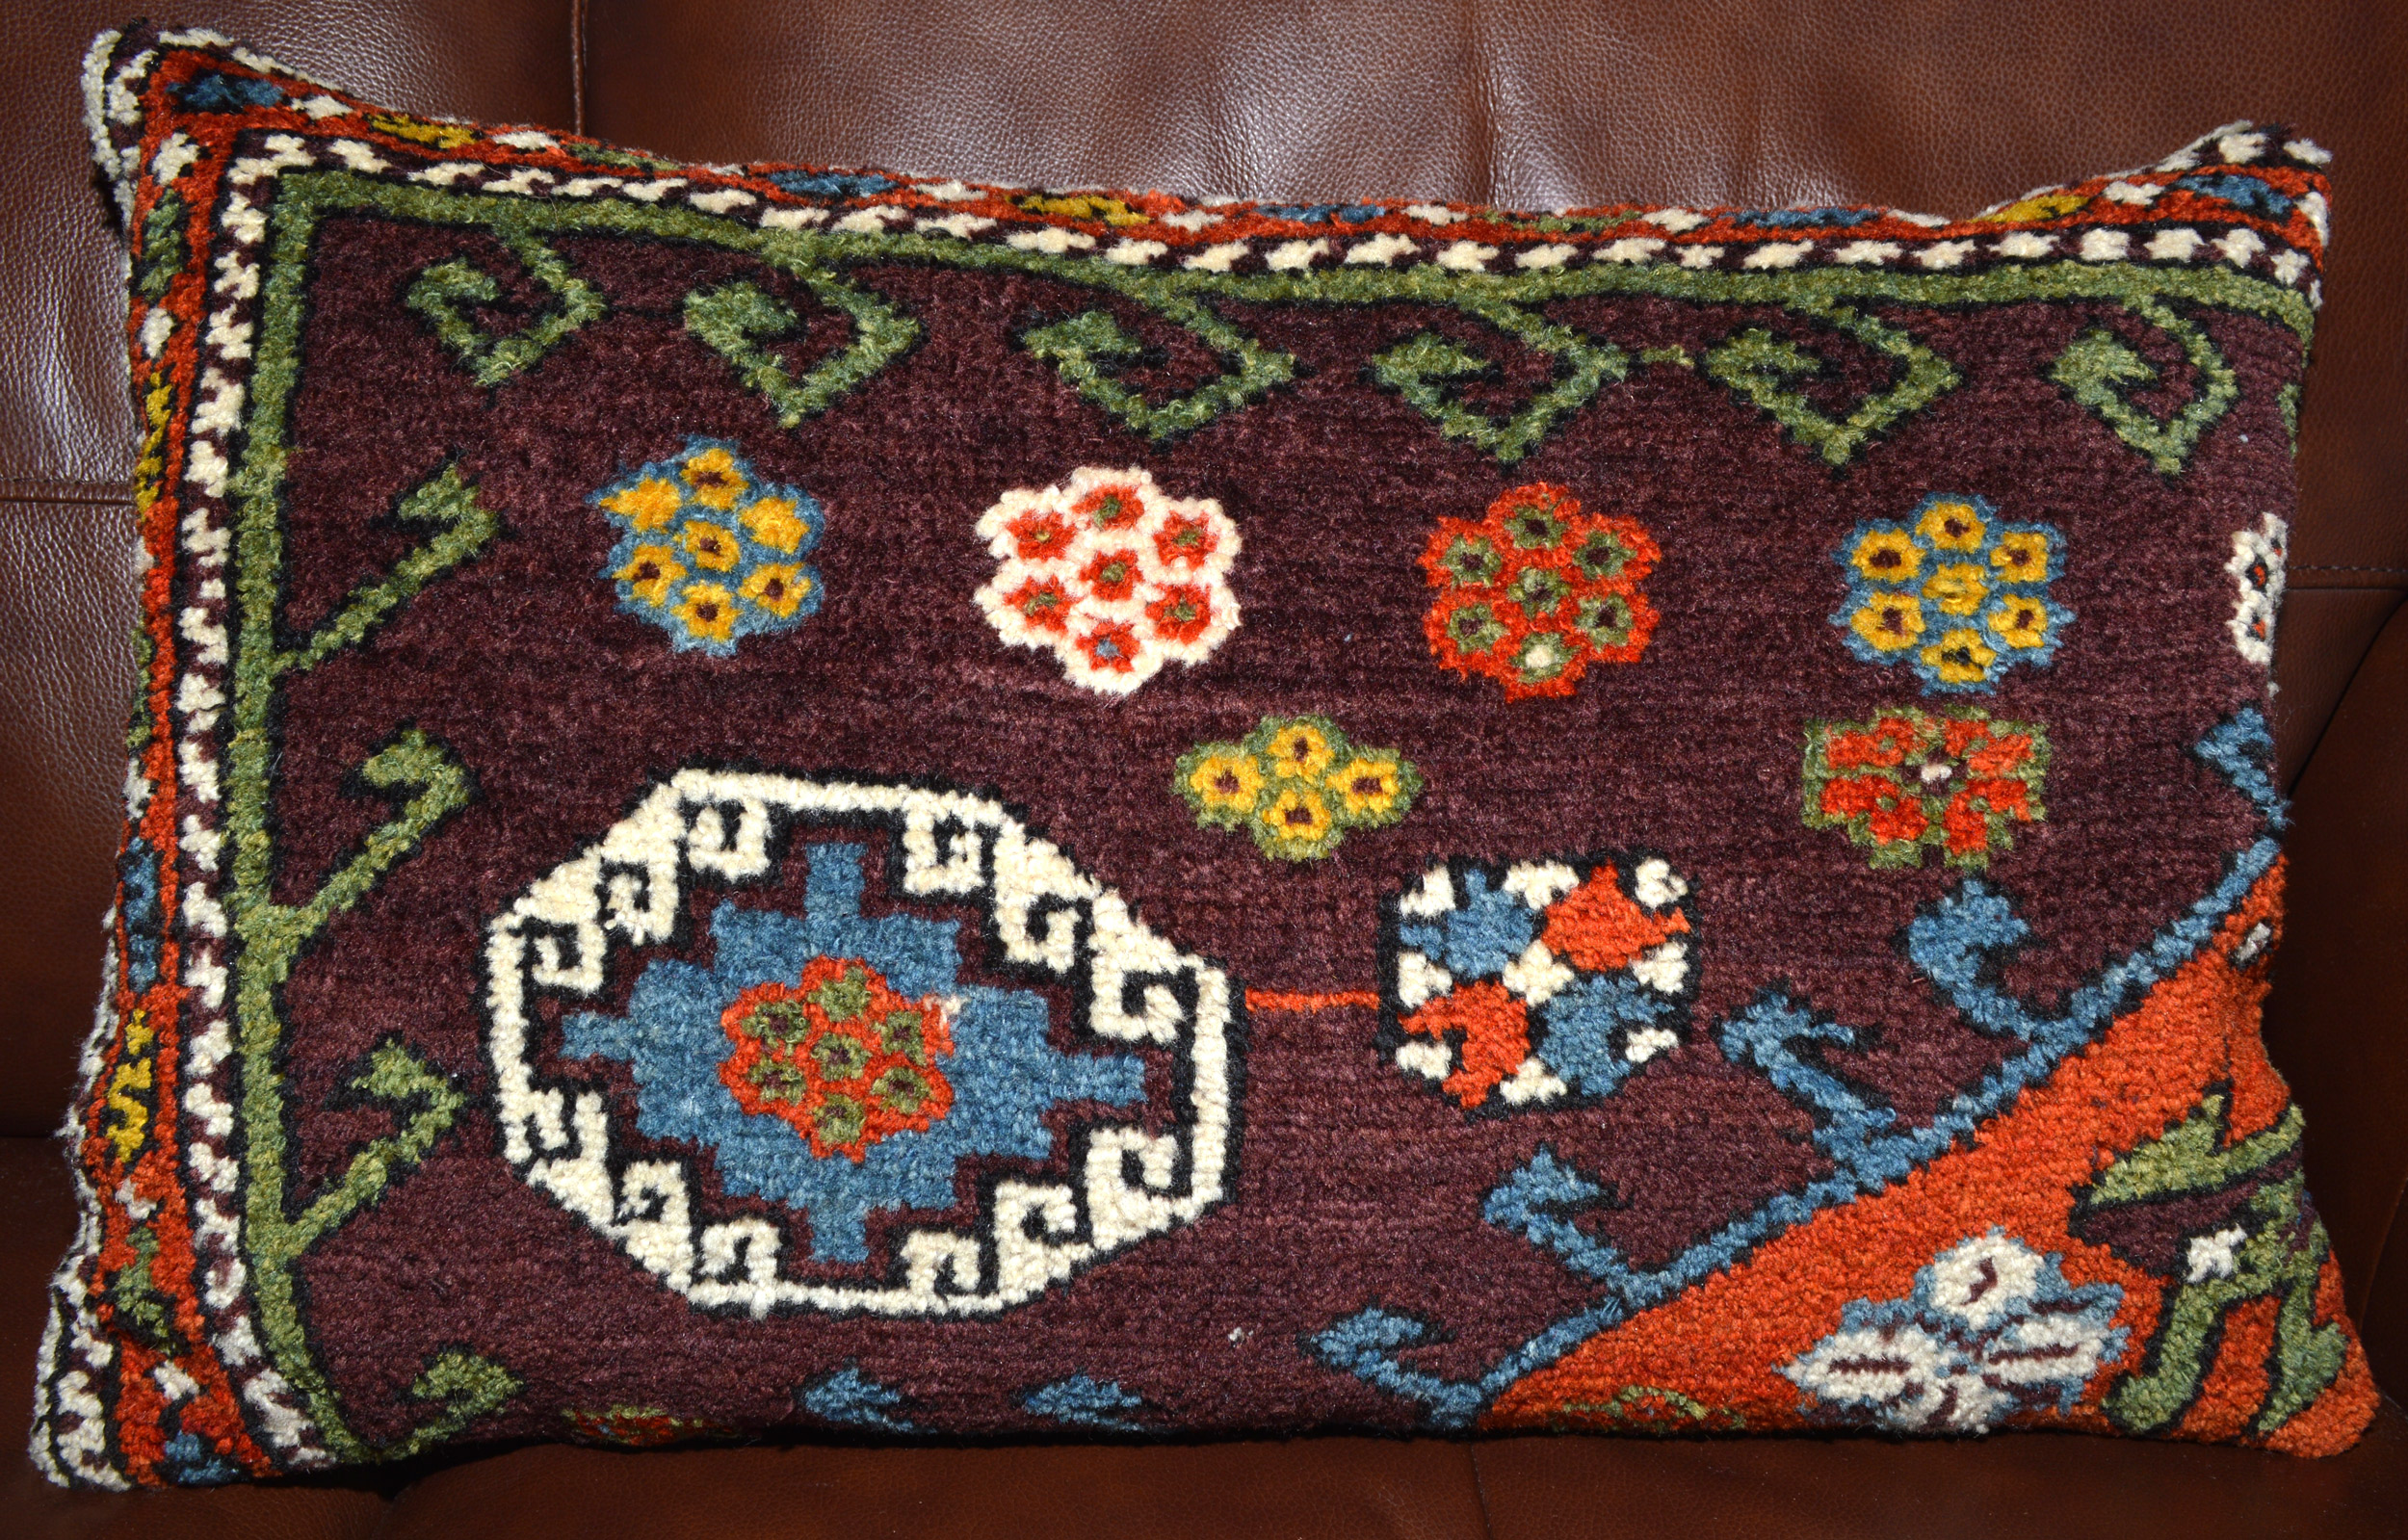 Antique Turkish rug fragment pillow, antique rug cushion, Douglas Stock Gallery, antique rugs Boston,MA area